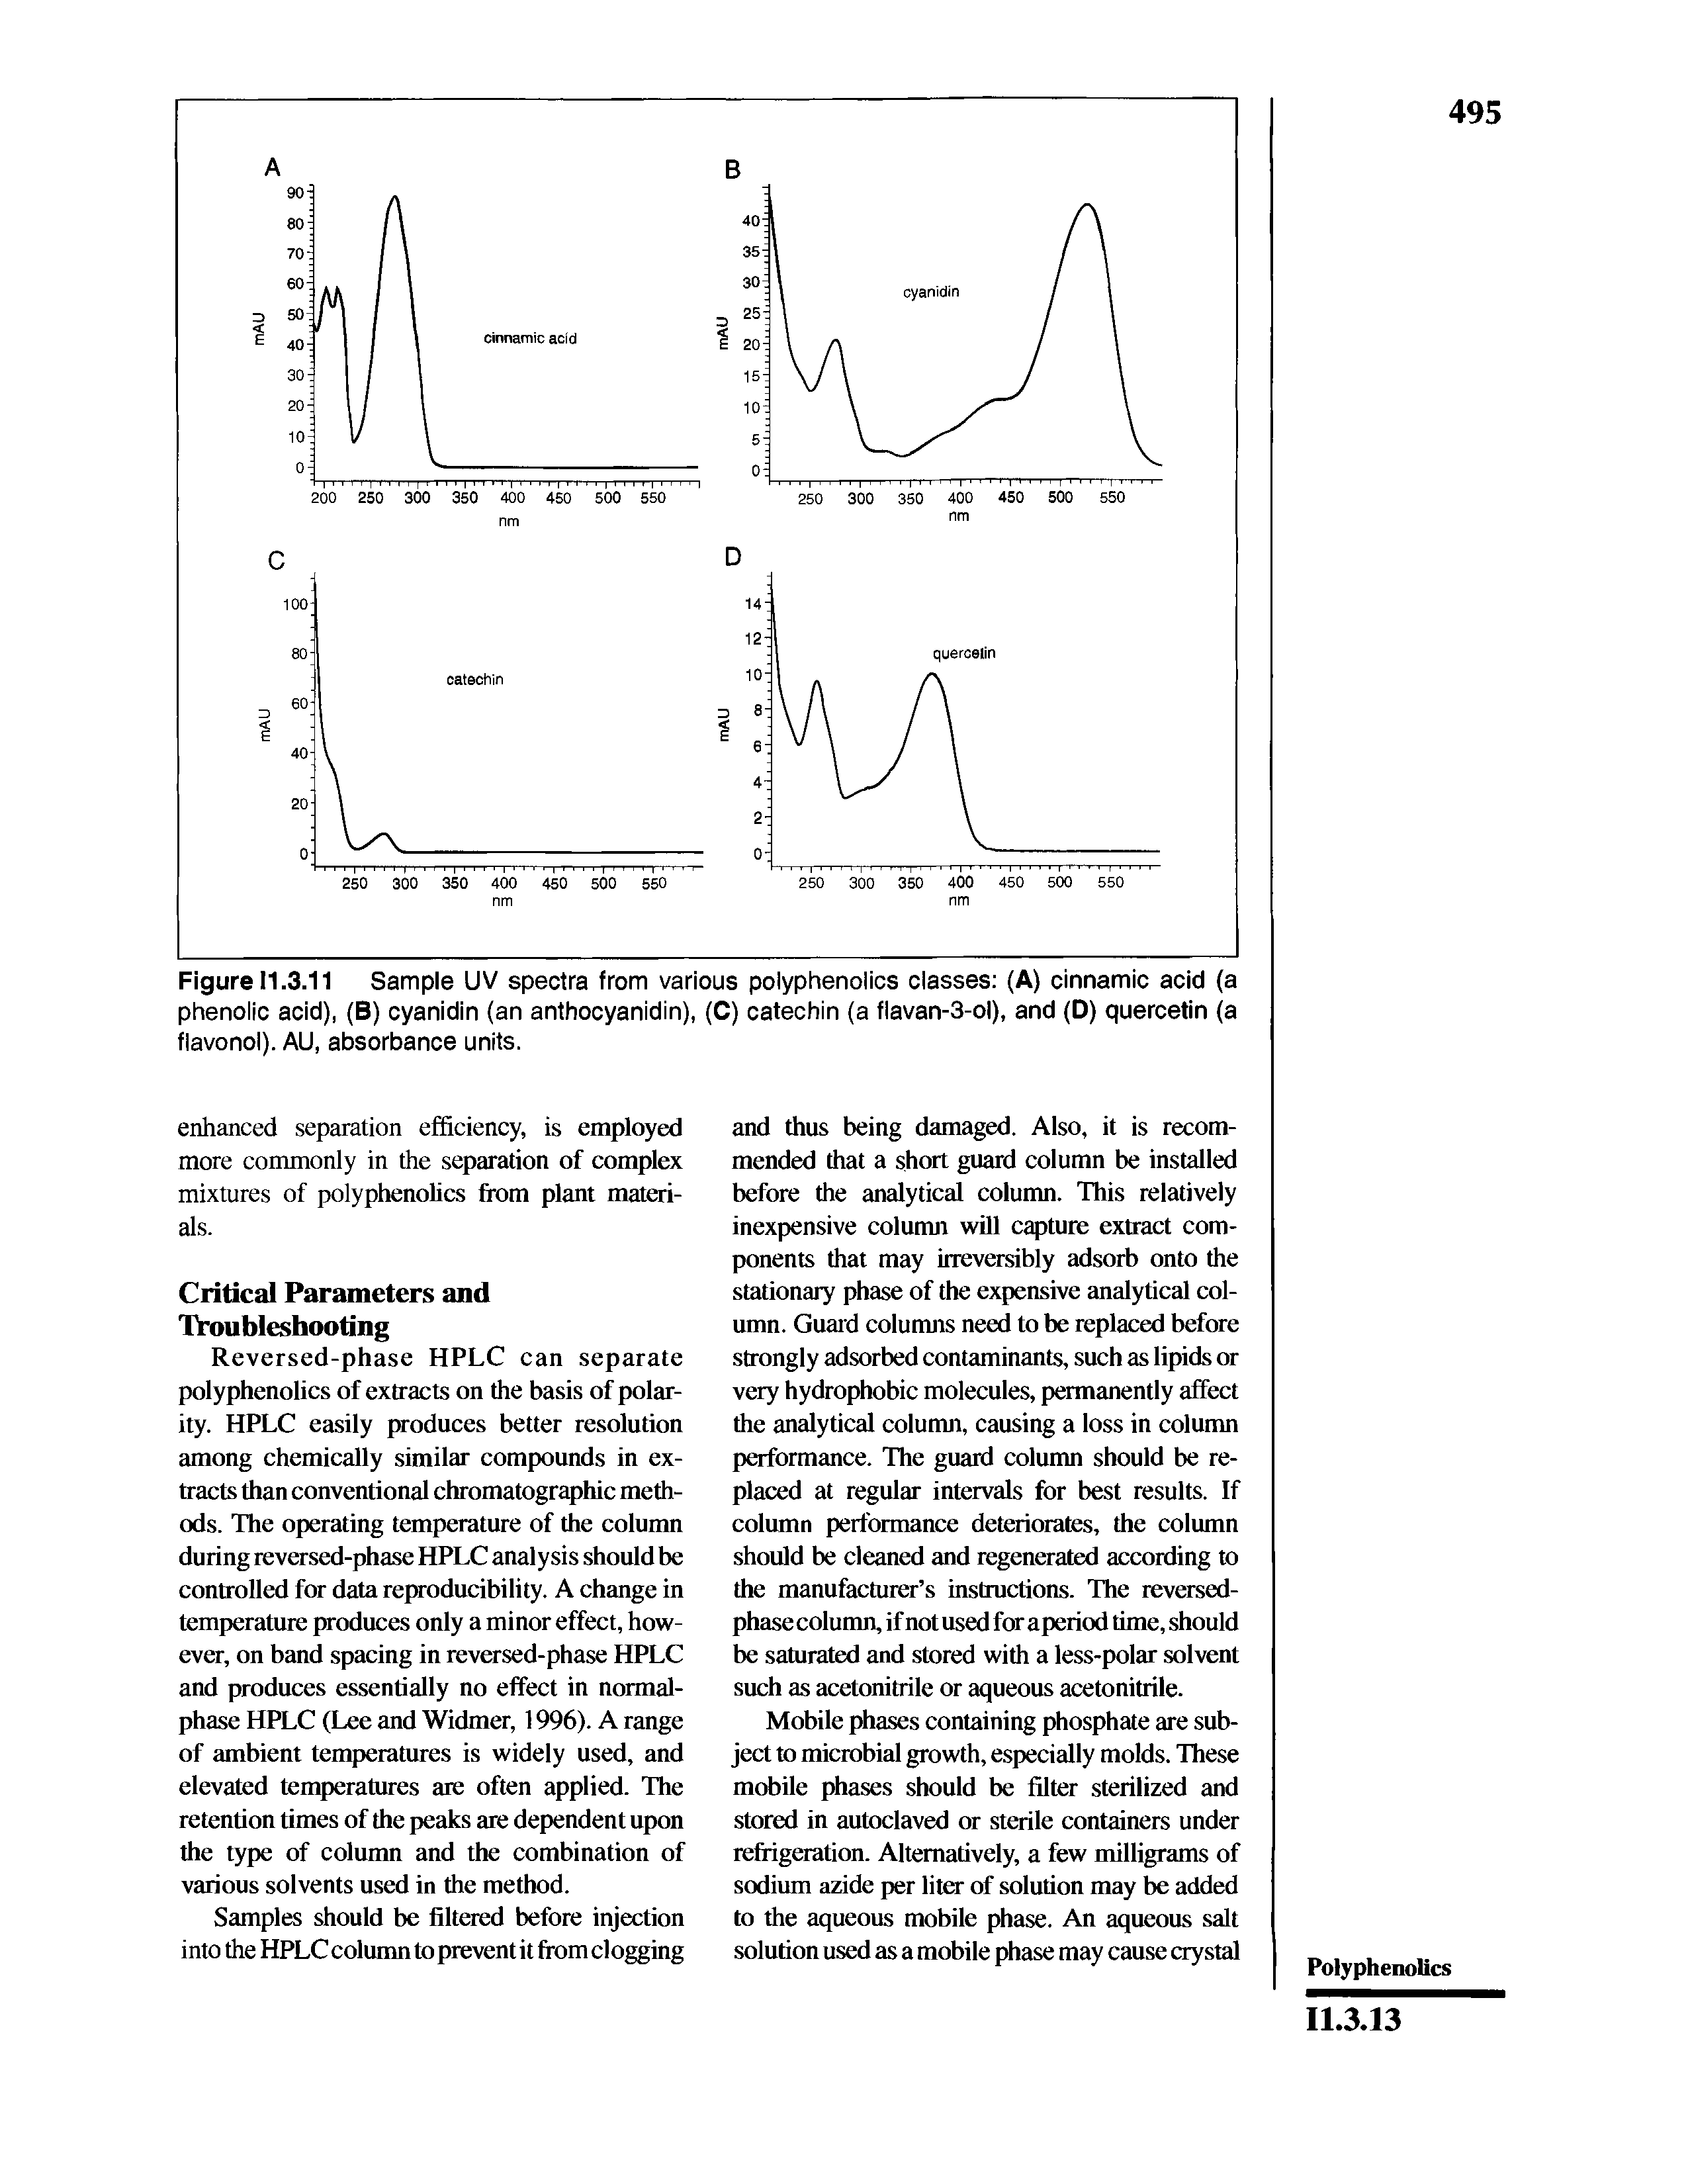 Figure 11.3.11 Sample UV spectra from various polyphenolics classes (A) cinnamic acid (a phenolic acid), (B) cyanidin (an anthocyanidin), (C) catechin (a flavan-3-ol), and (D) quercetin (a flavonol). AU, absorbance units.